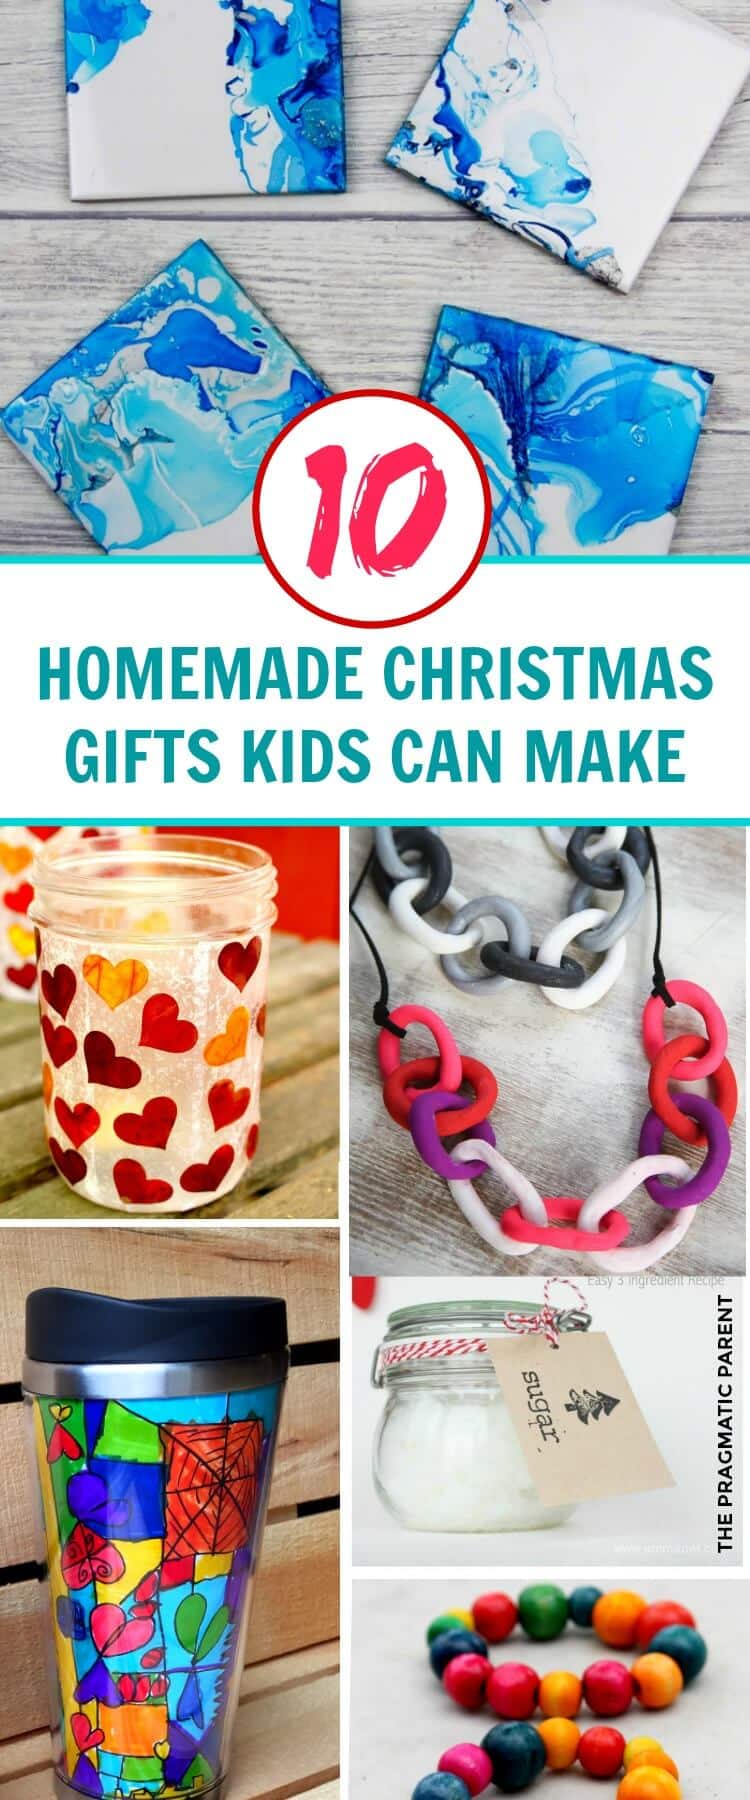 10 Beautiful Homemade Christmas Gifts Kids Can Make
